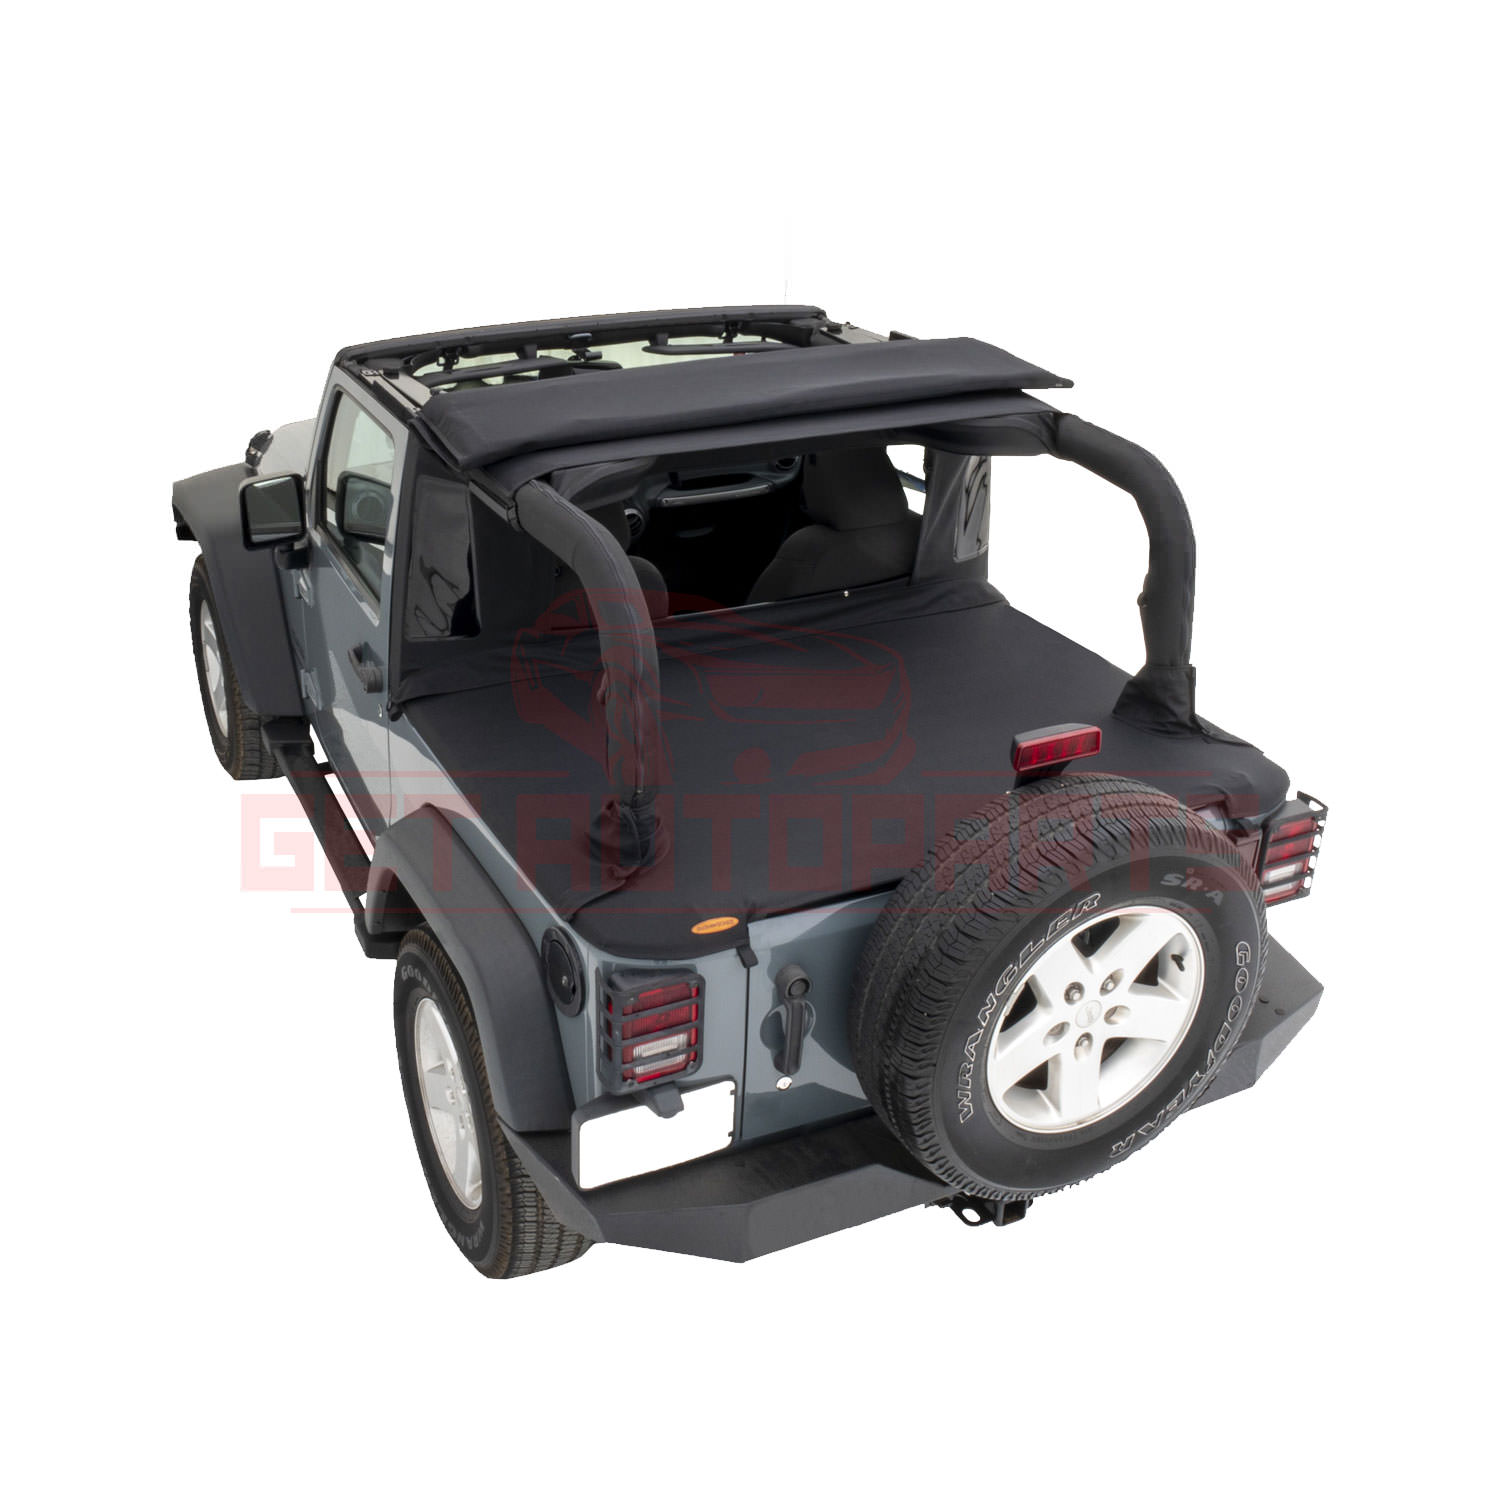 Bushwacker Soft Top for Jeep Wrangler JK 2018 657896964185 | eBay